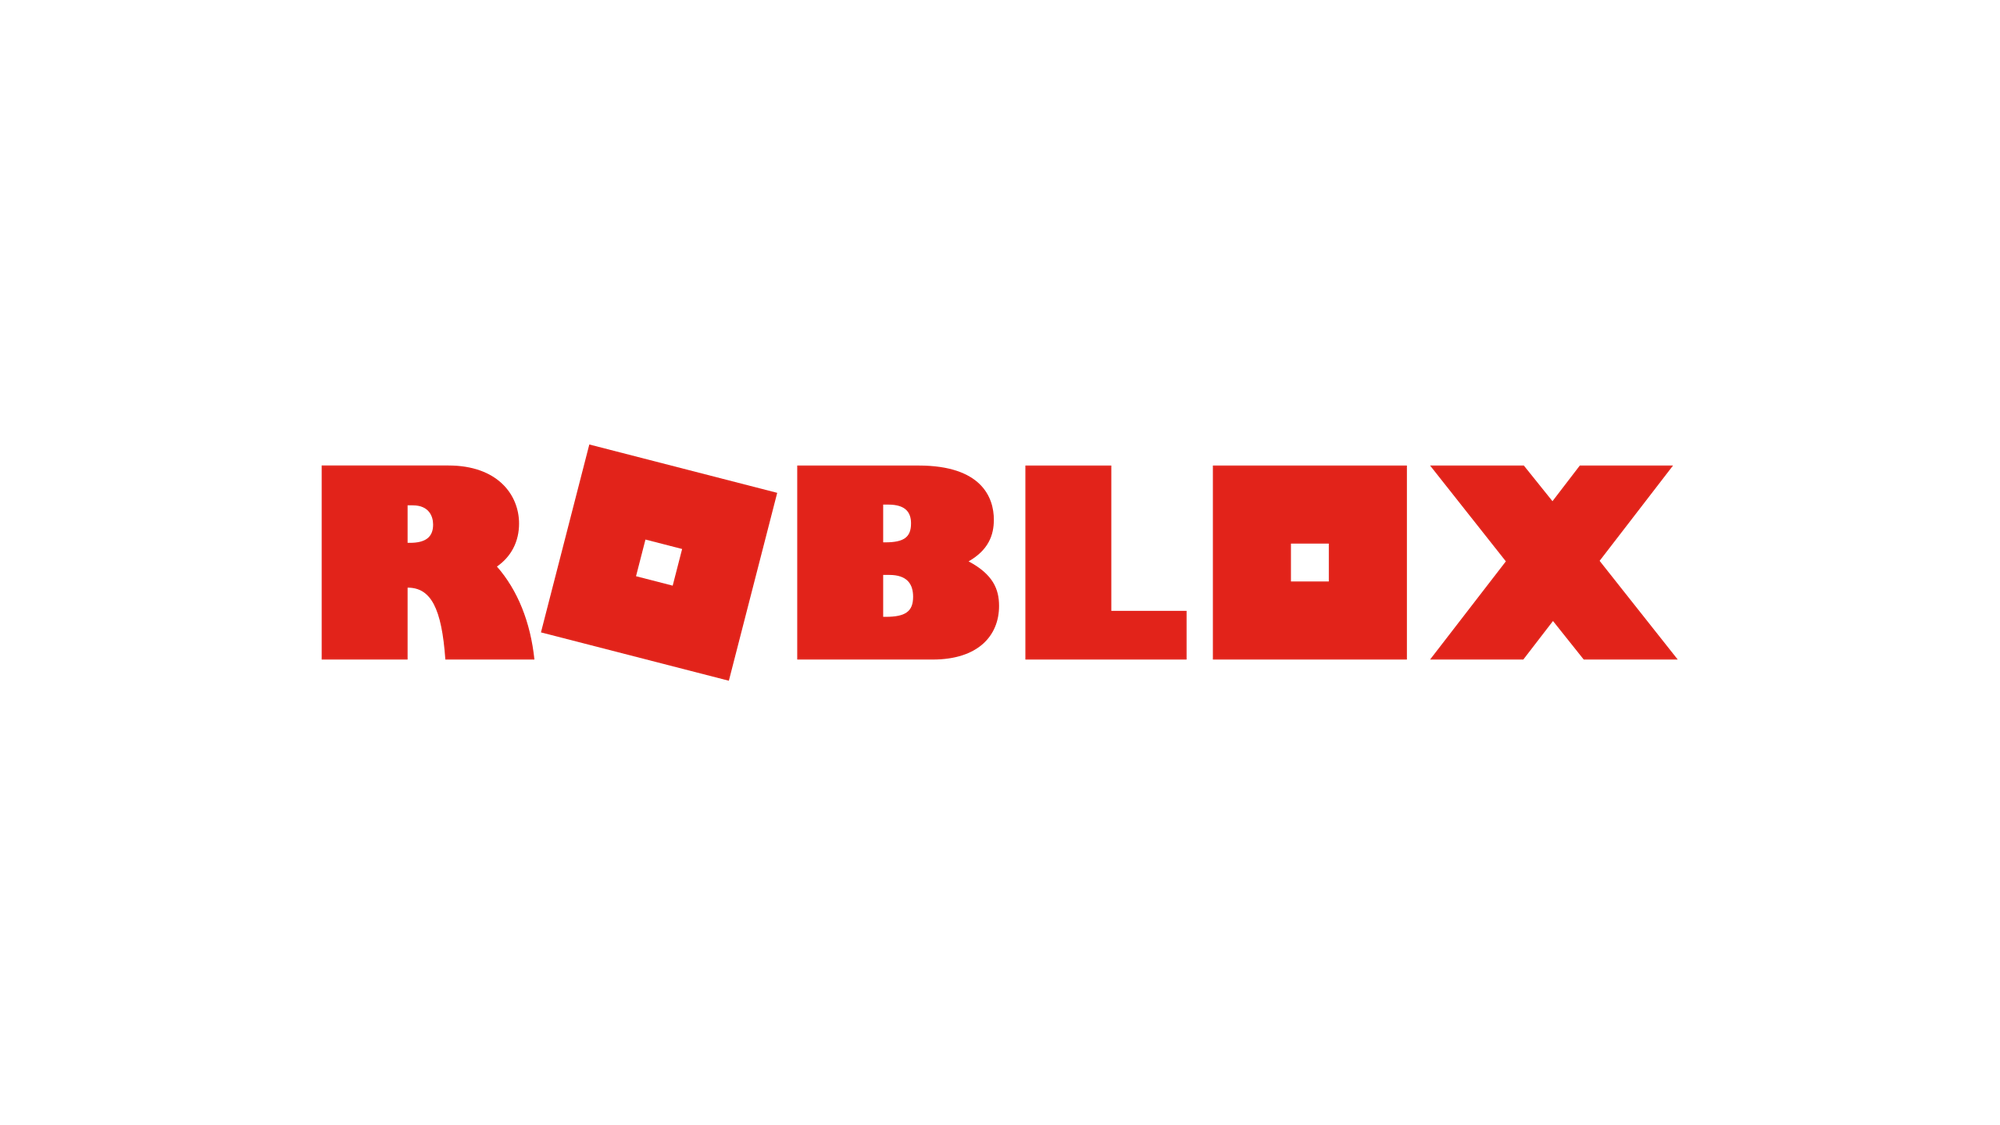 Roblox logo test. Roblox powering imagination. Roblox Anthem ("here we go"). Rоblоx.